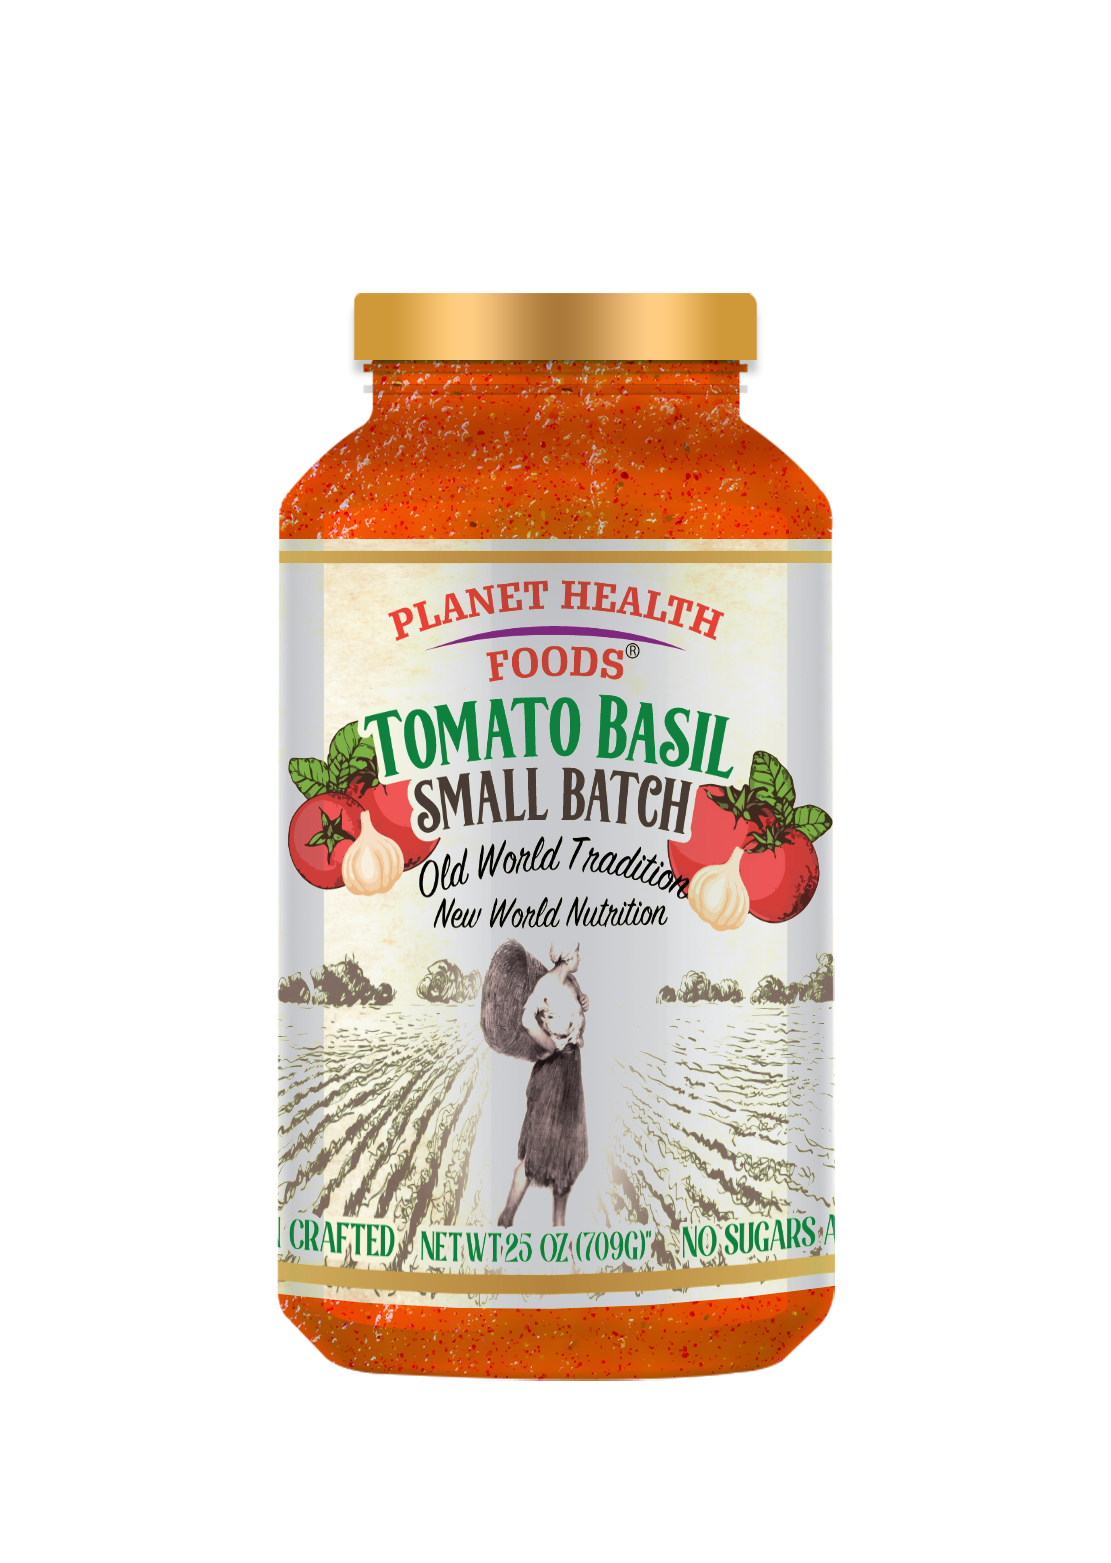 Tomato Basil Sauce